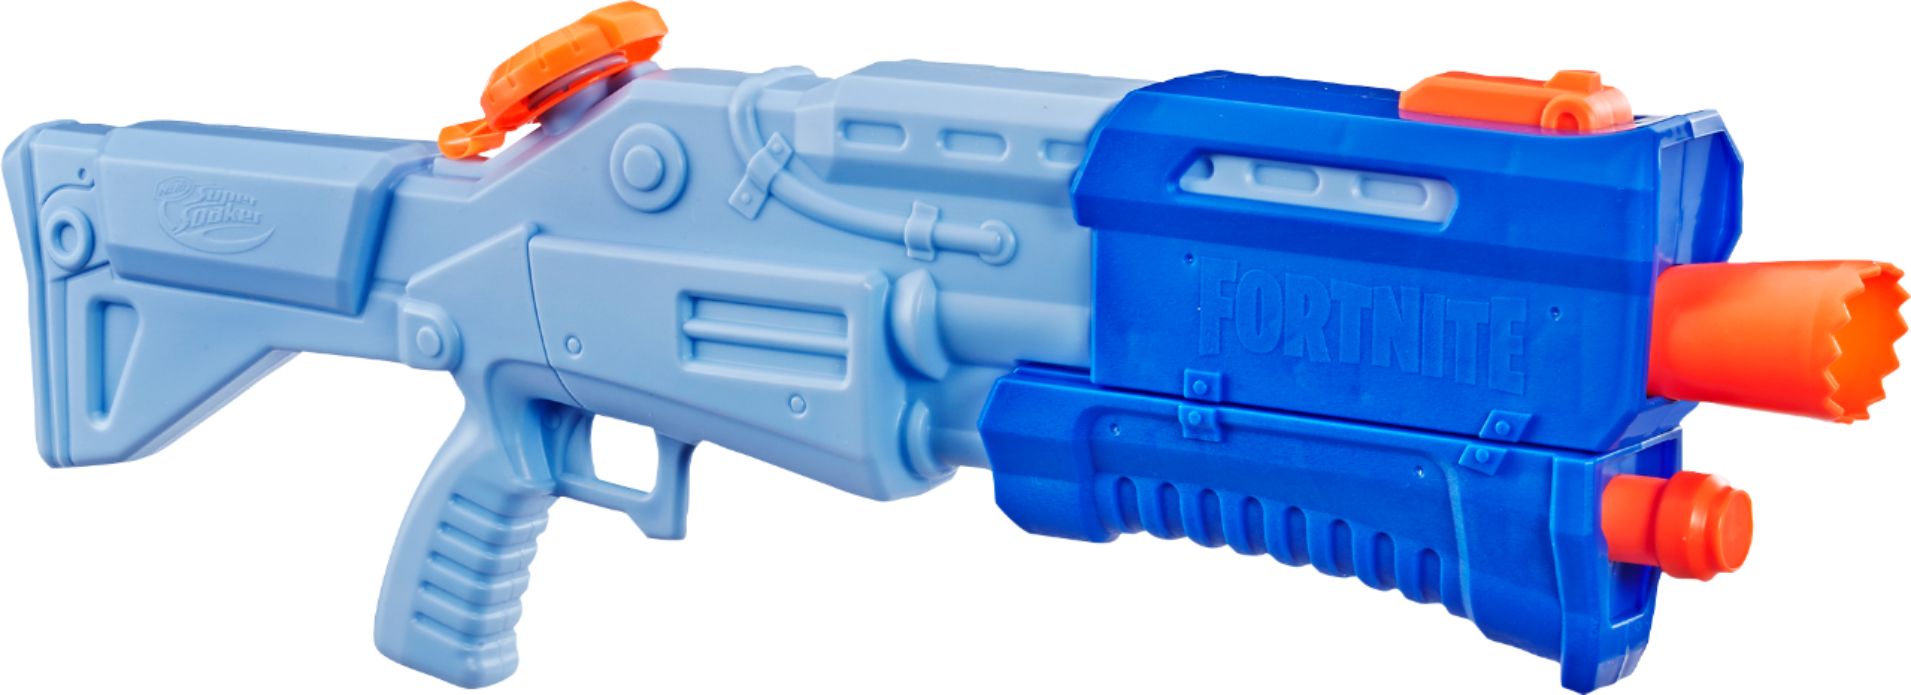 NERF E6876 Fortnite TS-R Super Soaker Water Blaster Toy for sale online 